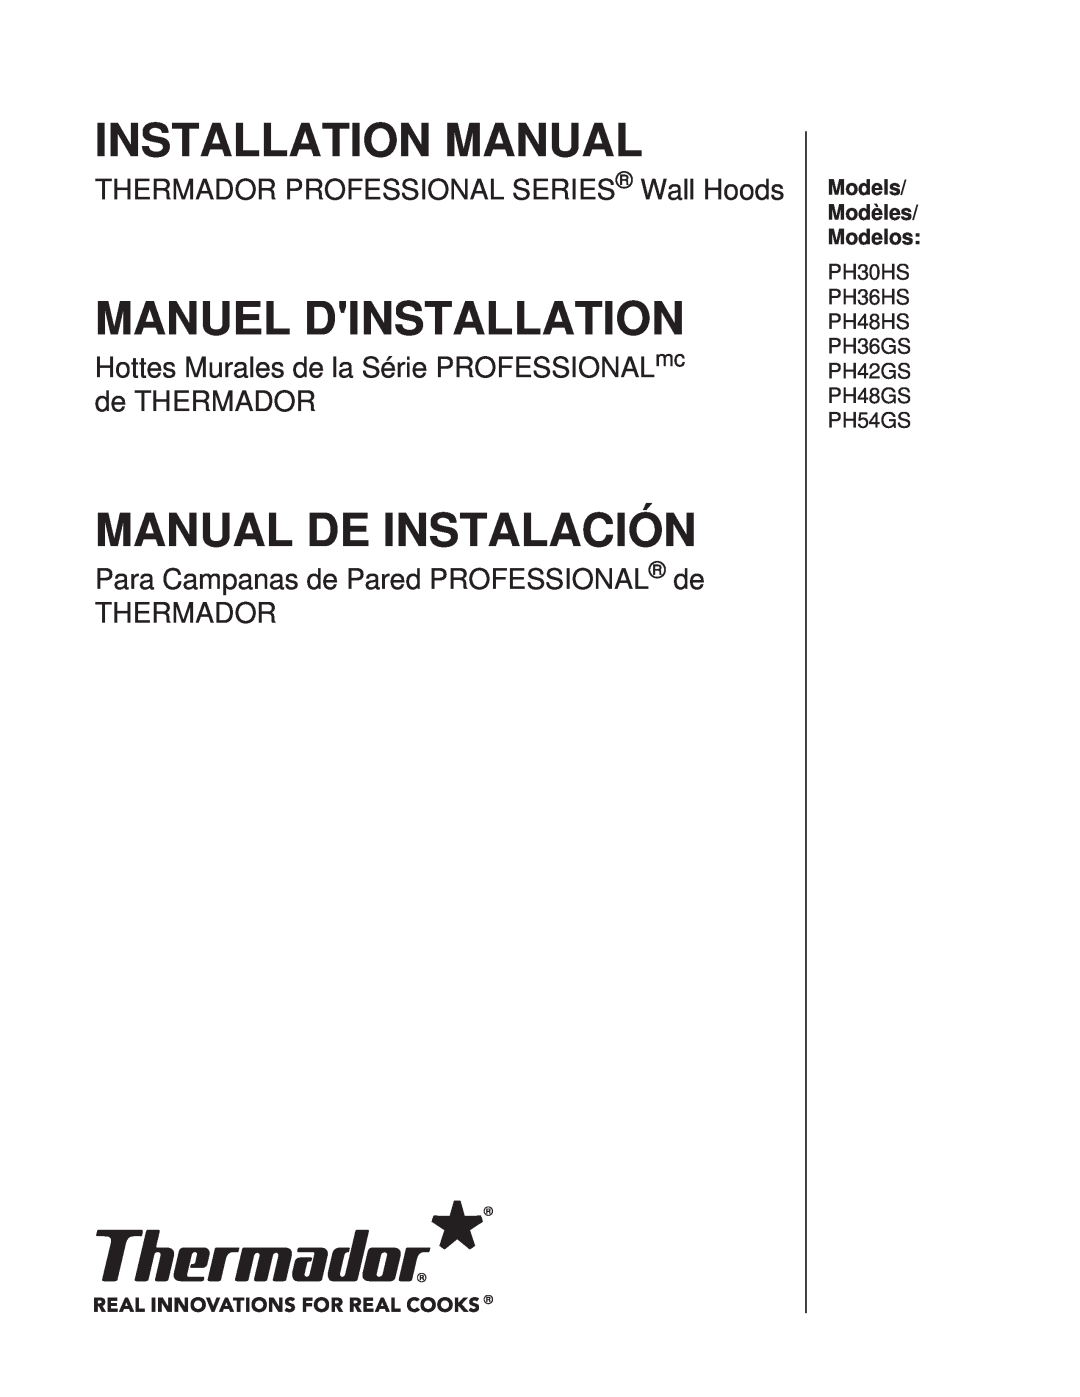 Thermador PH48HS, PH54GS, PH48GS installation manual Installation Manual, Manuel Dinstallation, Manual De Instalación 